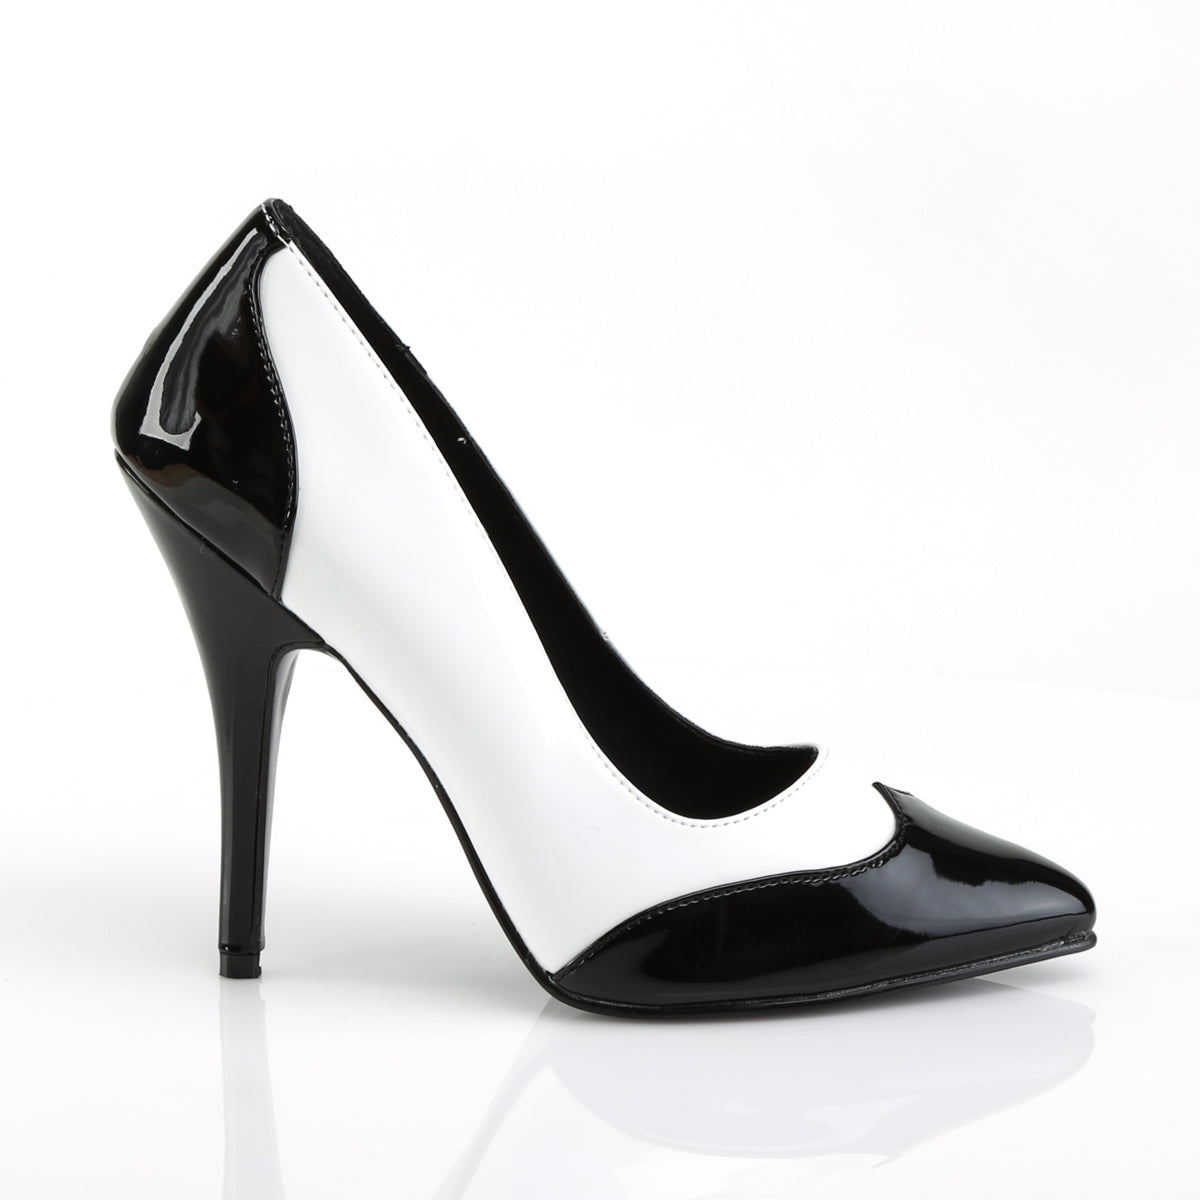 SEDUCE-425 Sexy Shoes 5" Heel Black White Fetish Footwear-Pleaser- Sexy Shoes Fetish Heels